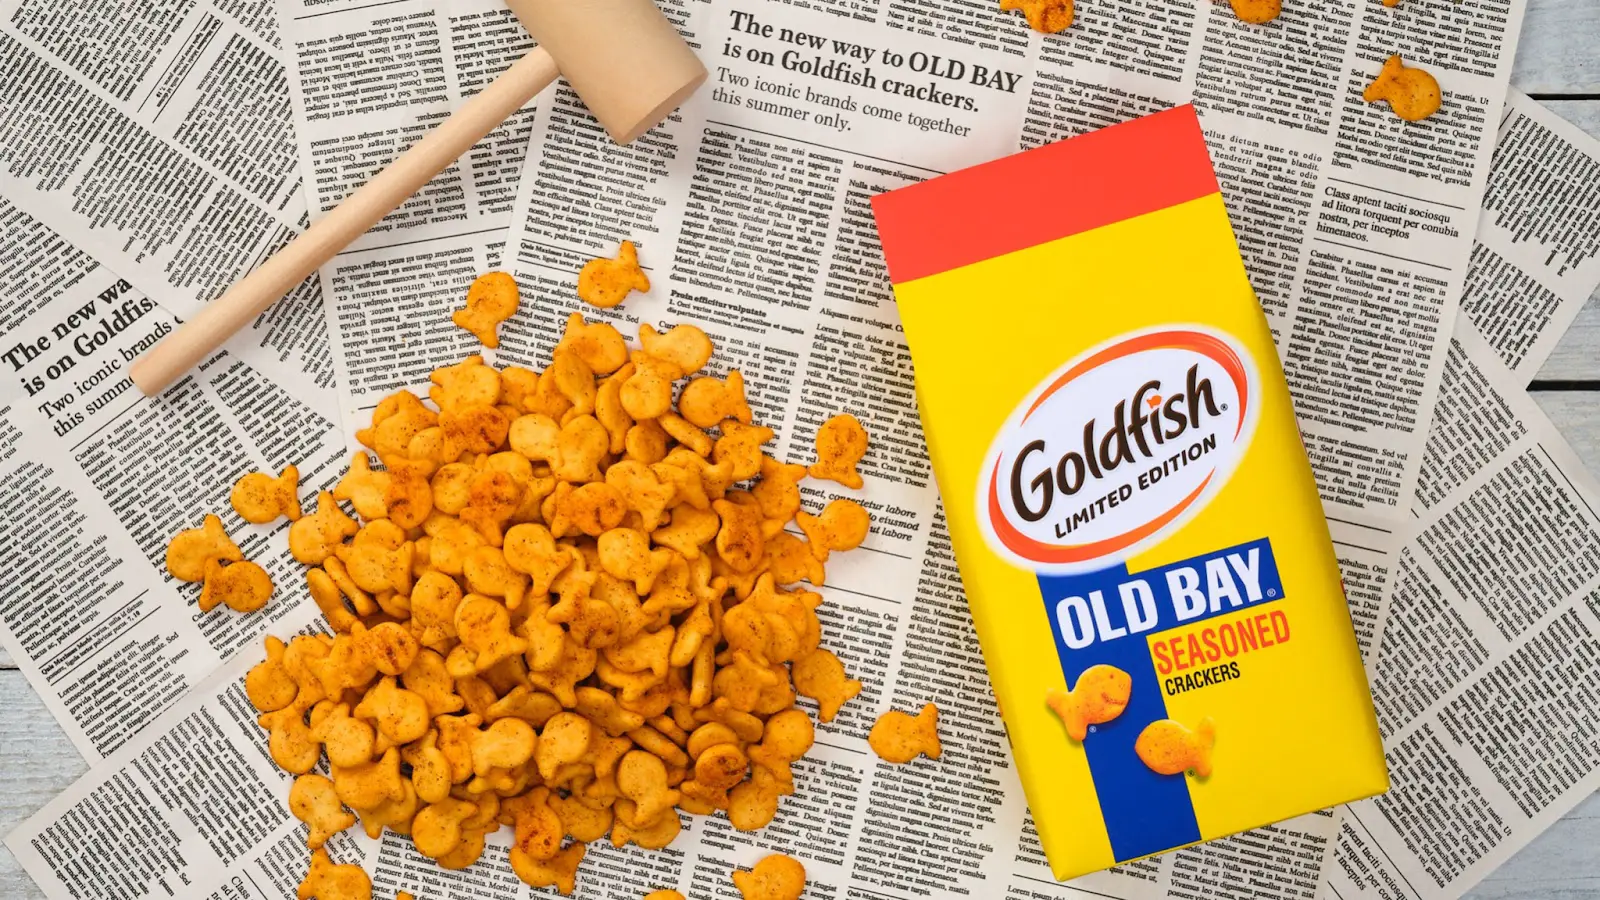 How Long Do Goldfish Crackers Last